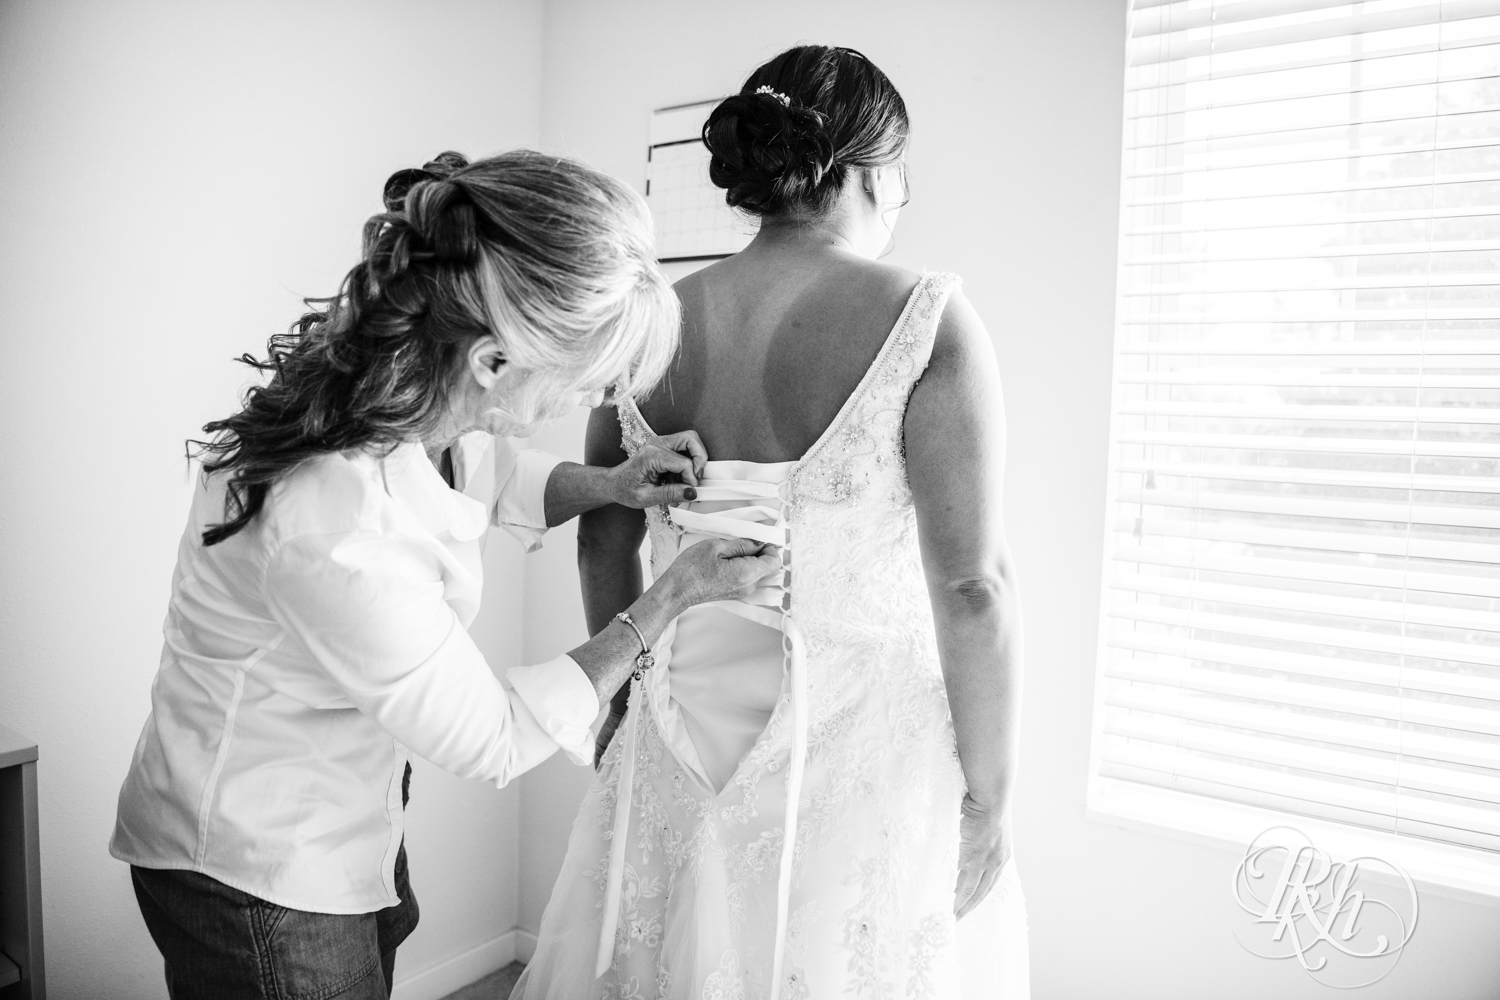 Mom lacing corset on wedding dress.